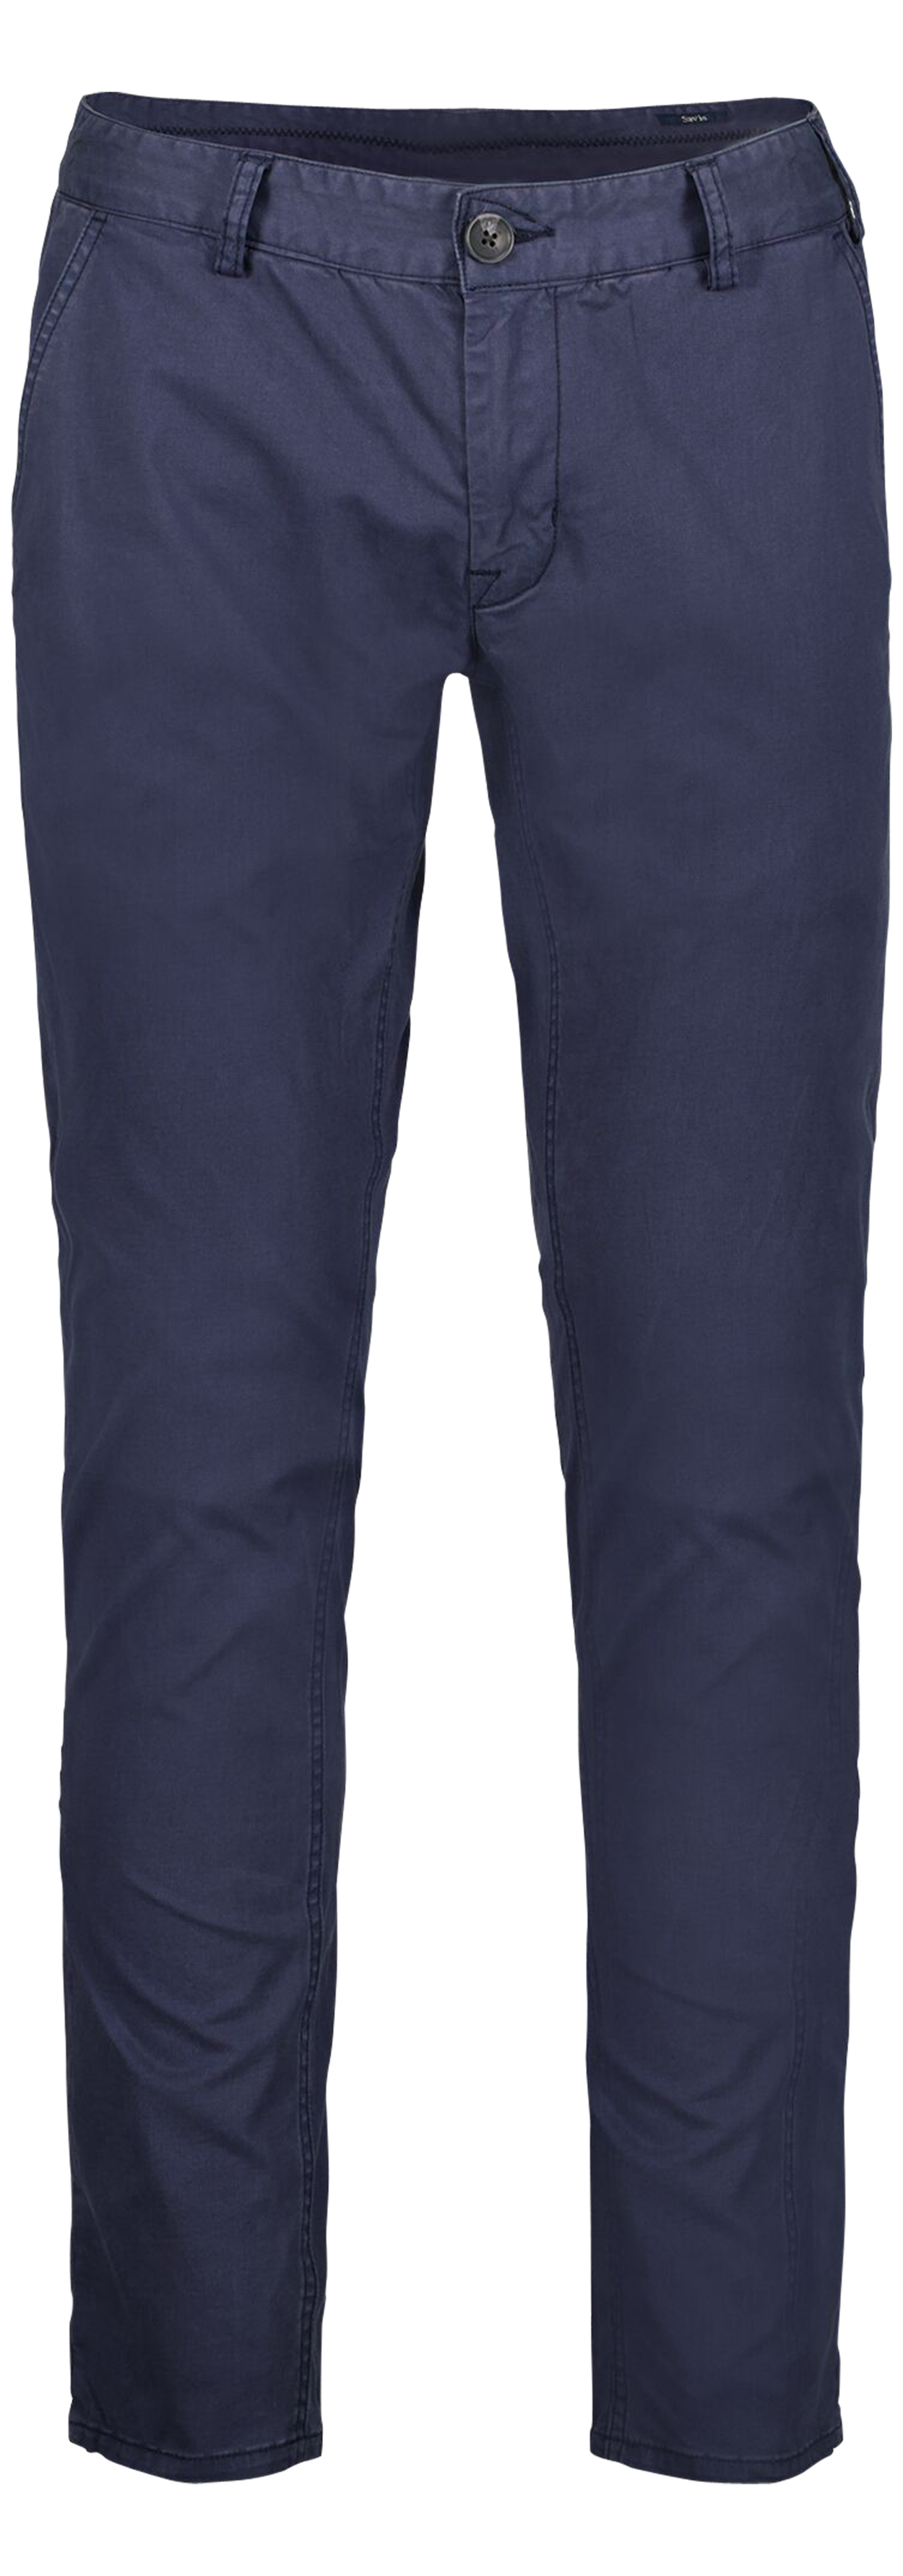 Pantalon Garcia en coton mélangé bleu marine